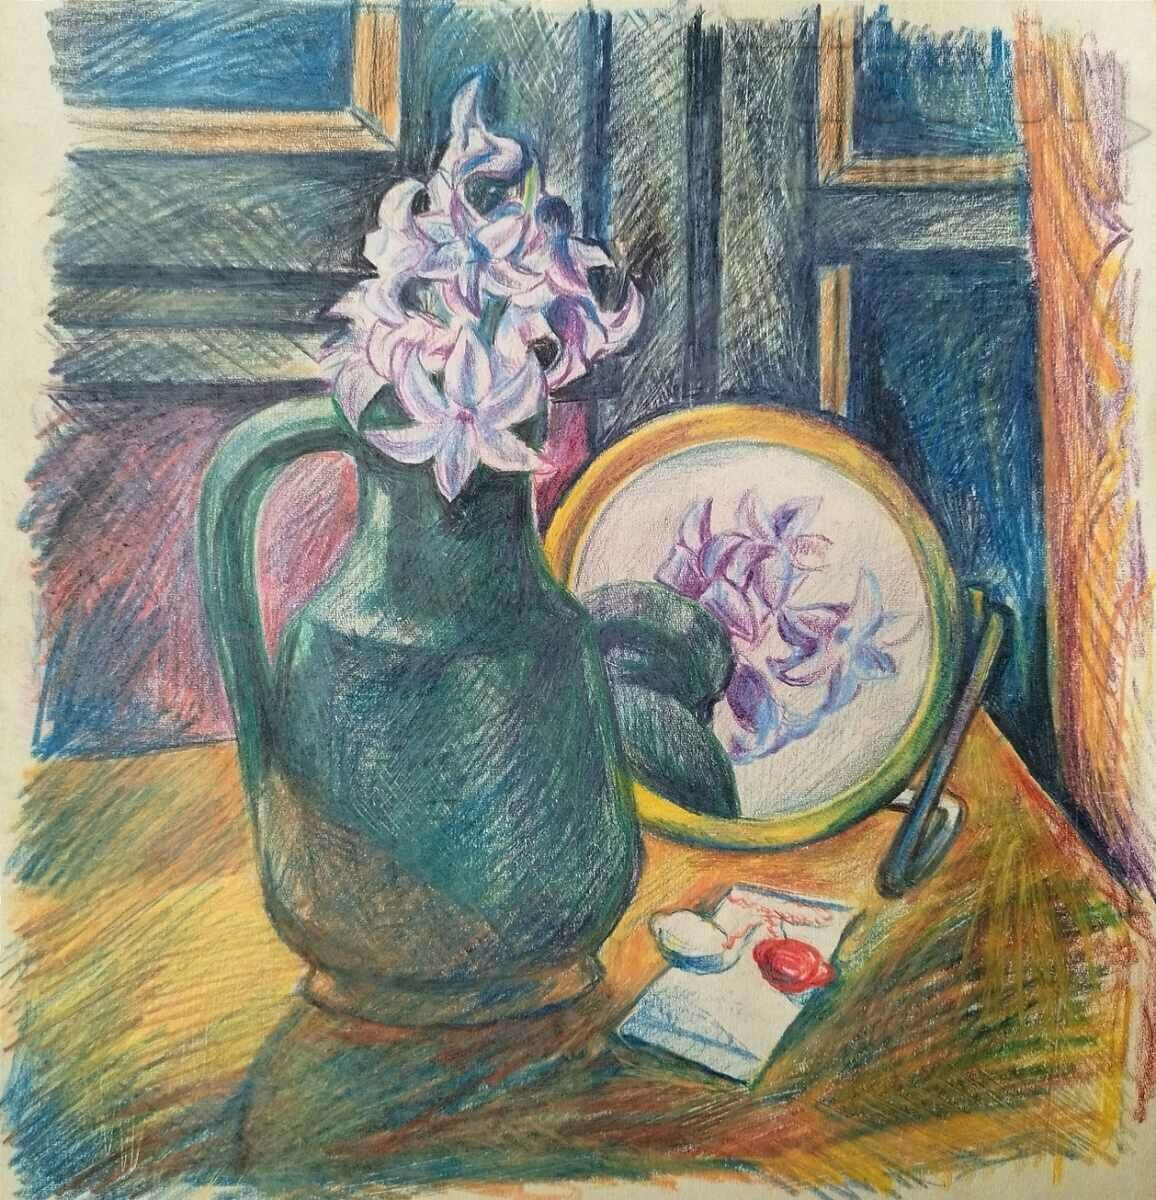 Painting, Jug, Flowers, 1970s